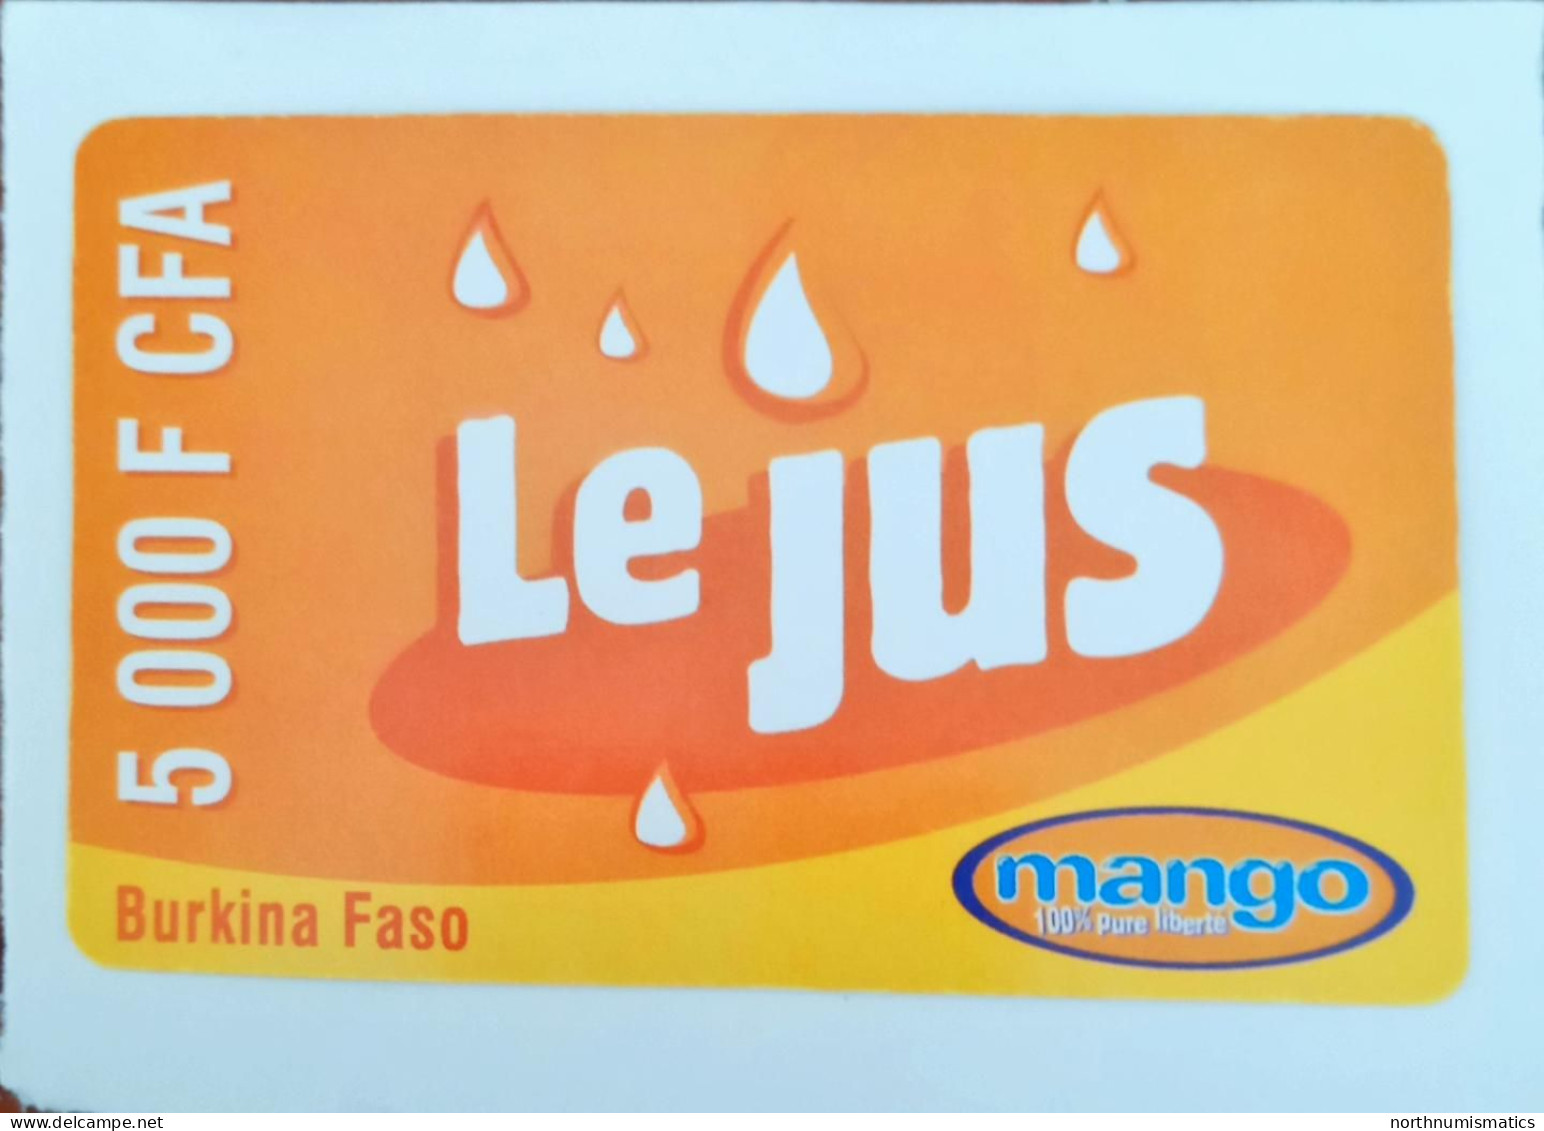 Burkina Faso Telecelfaso Mango Le Jus 5 000 F CFA  Prepaid İnternational Calling  Sample  Phone Card Unused - Lots - Collections